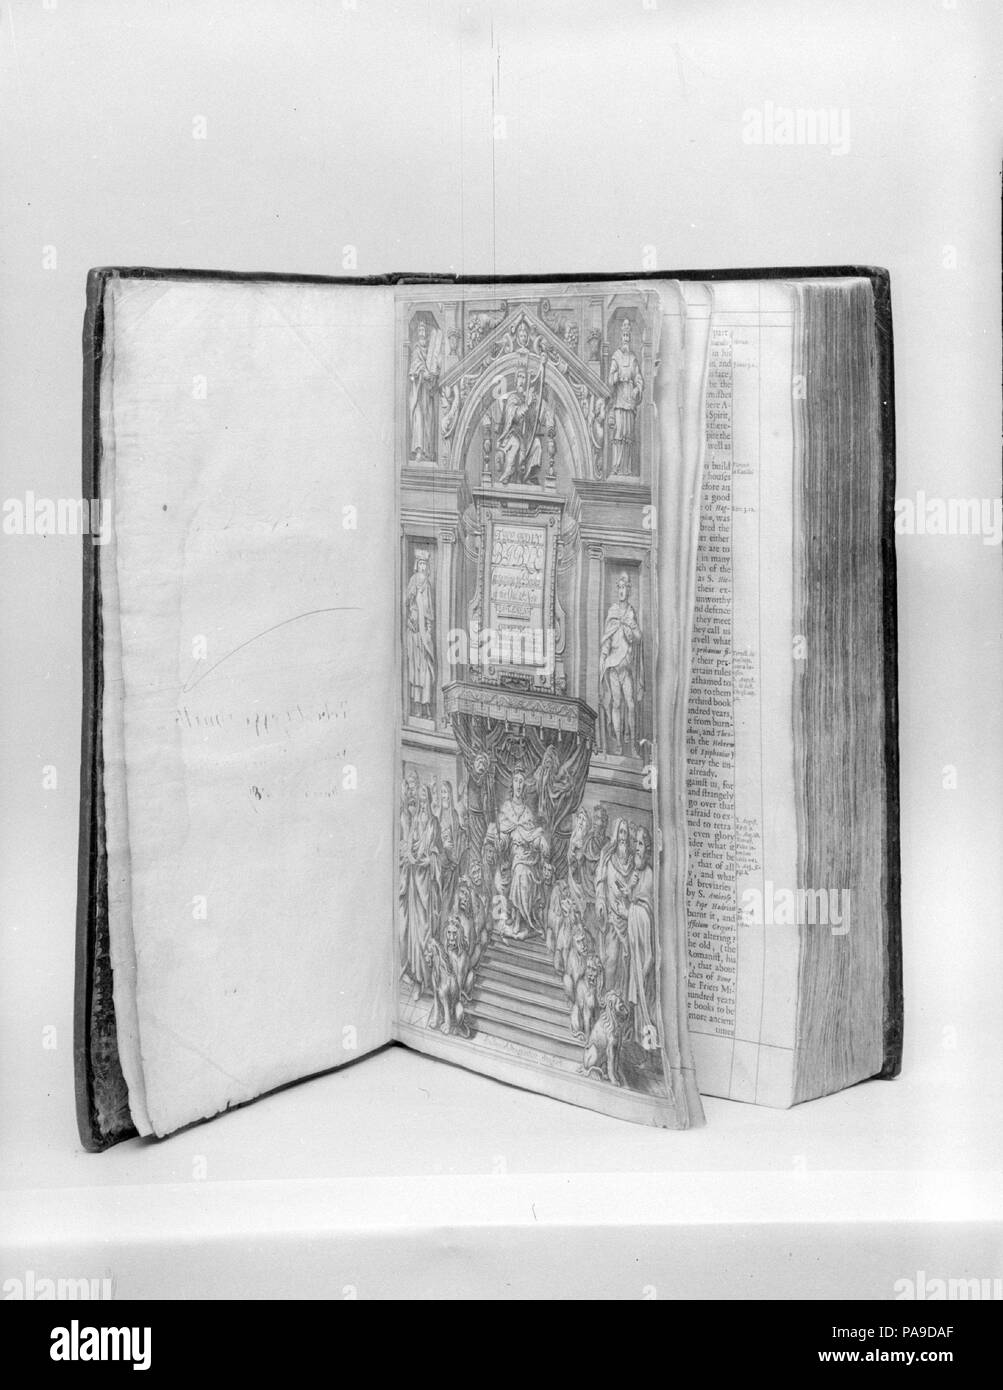 Bible. Dimensions: 17 1/8 x 11 1/4 in. (43.5 x 28.6 cm). Printer: Printed by John Hays. Date: 1674 edition. Museum: Metropolitan Museum of Art, New York, USA. Stock Photo